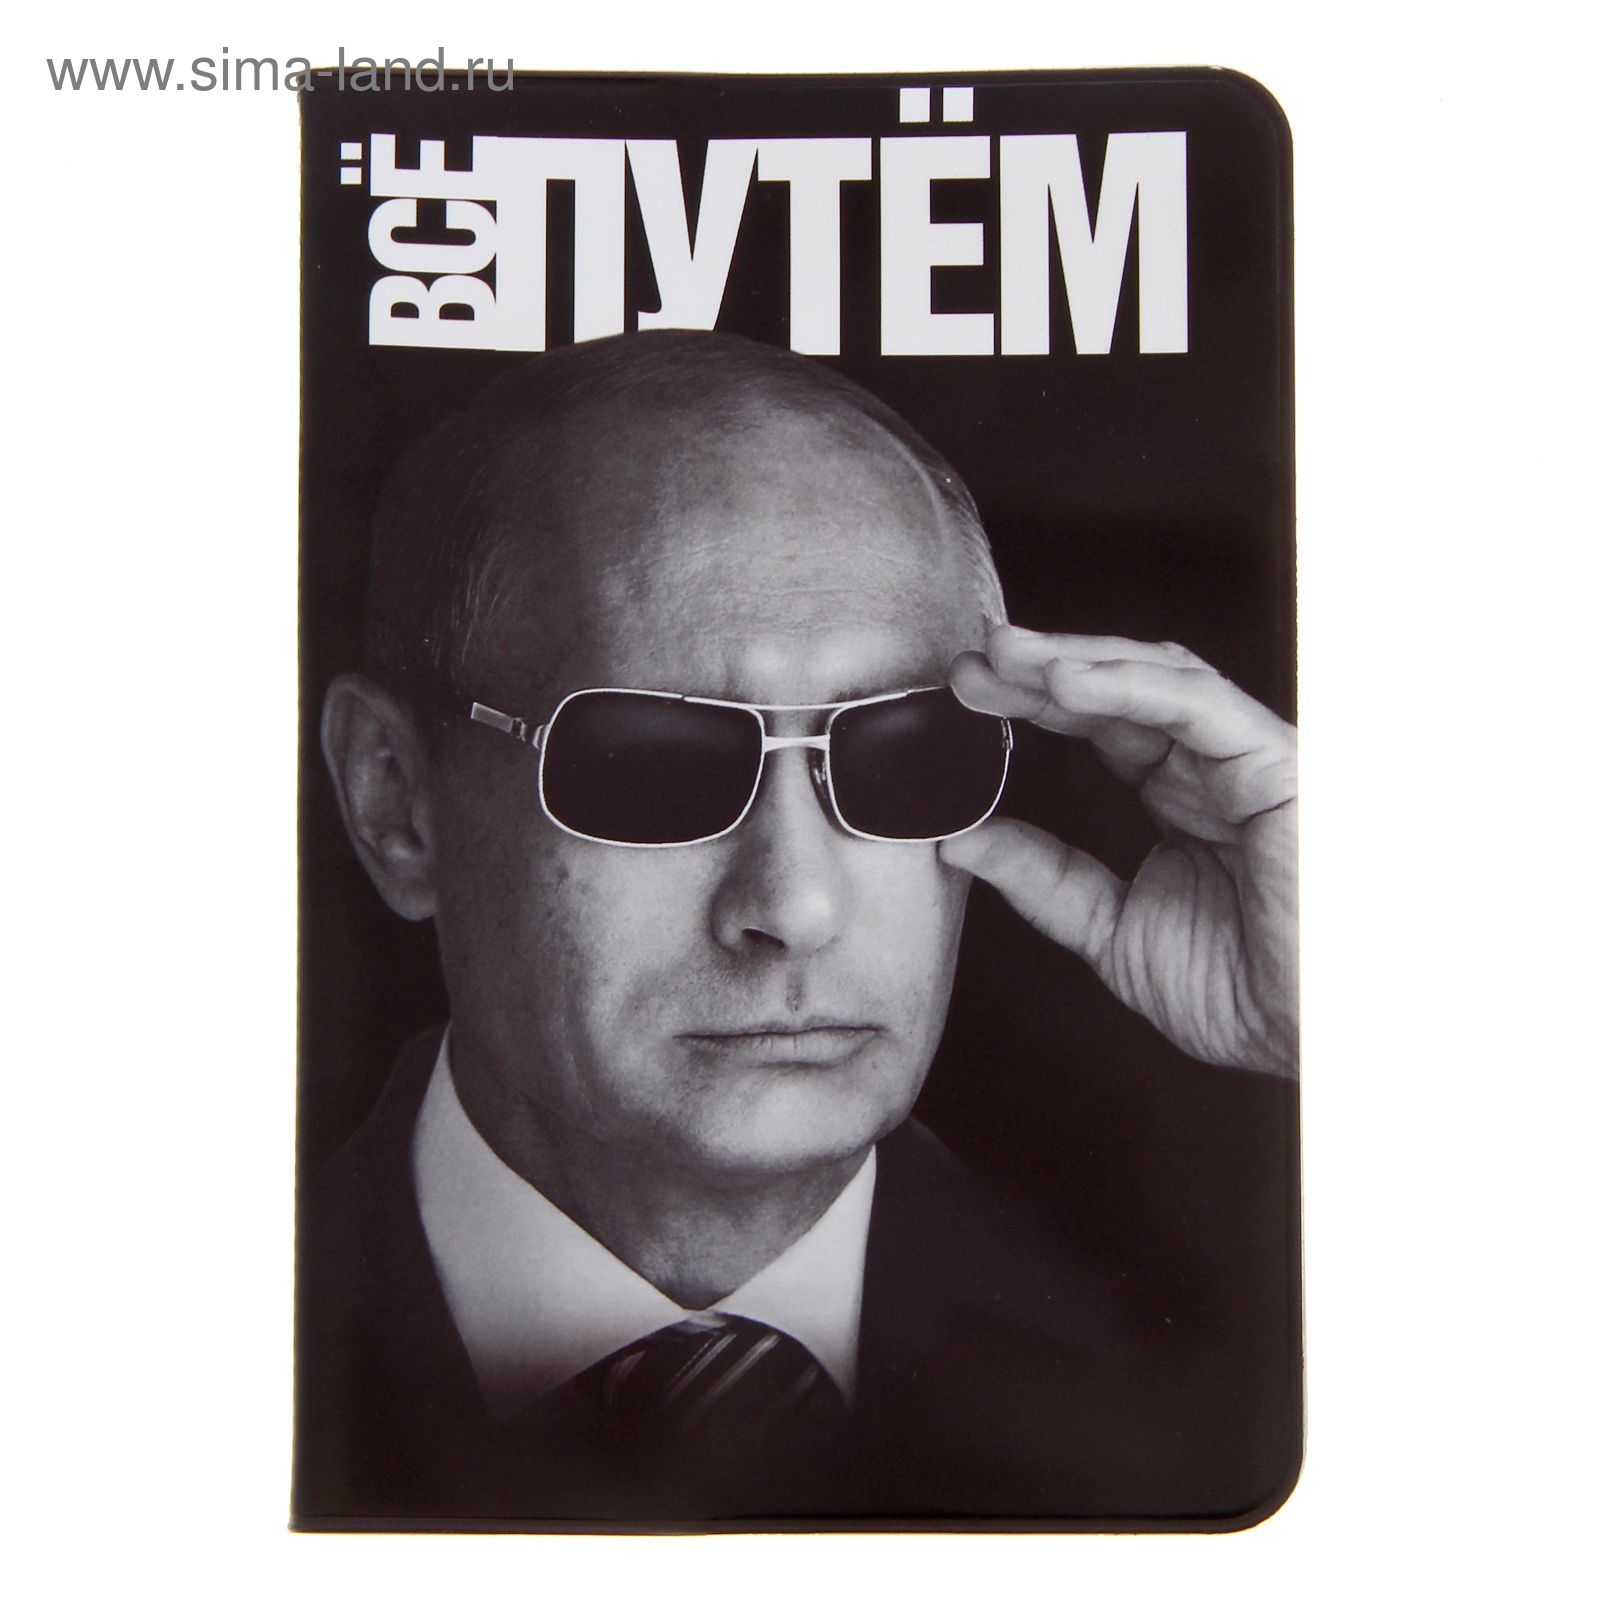 Обложка на паспорт с Путиным